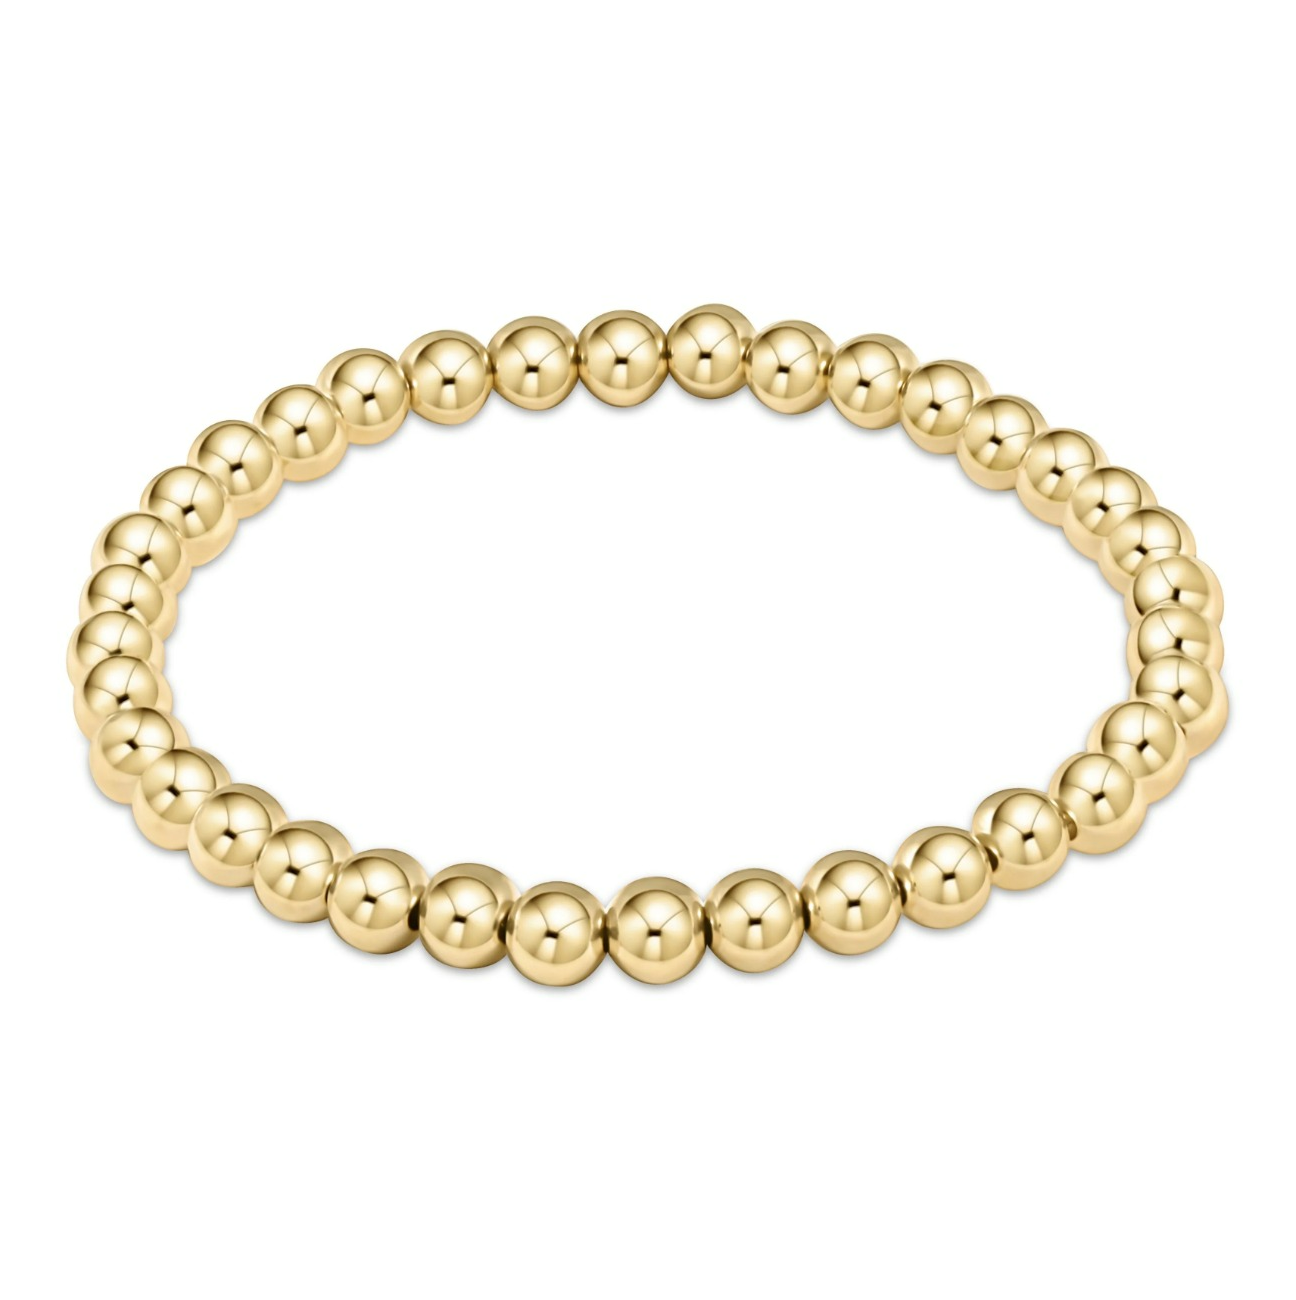 Enewton classic gold filled 5mm bead bracelet